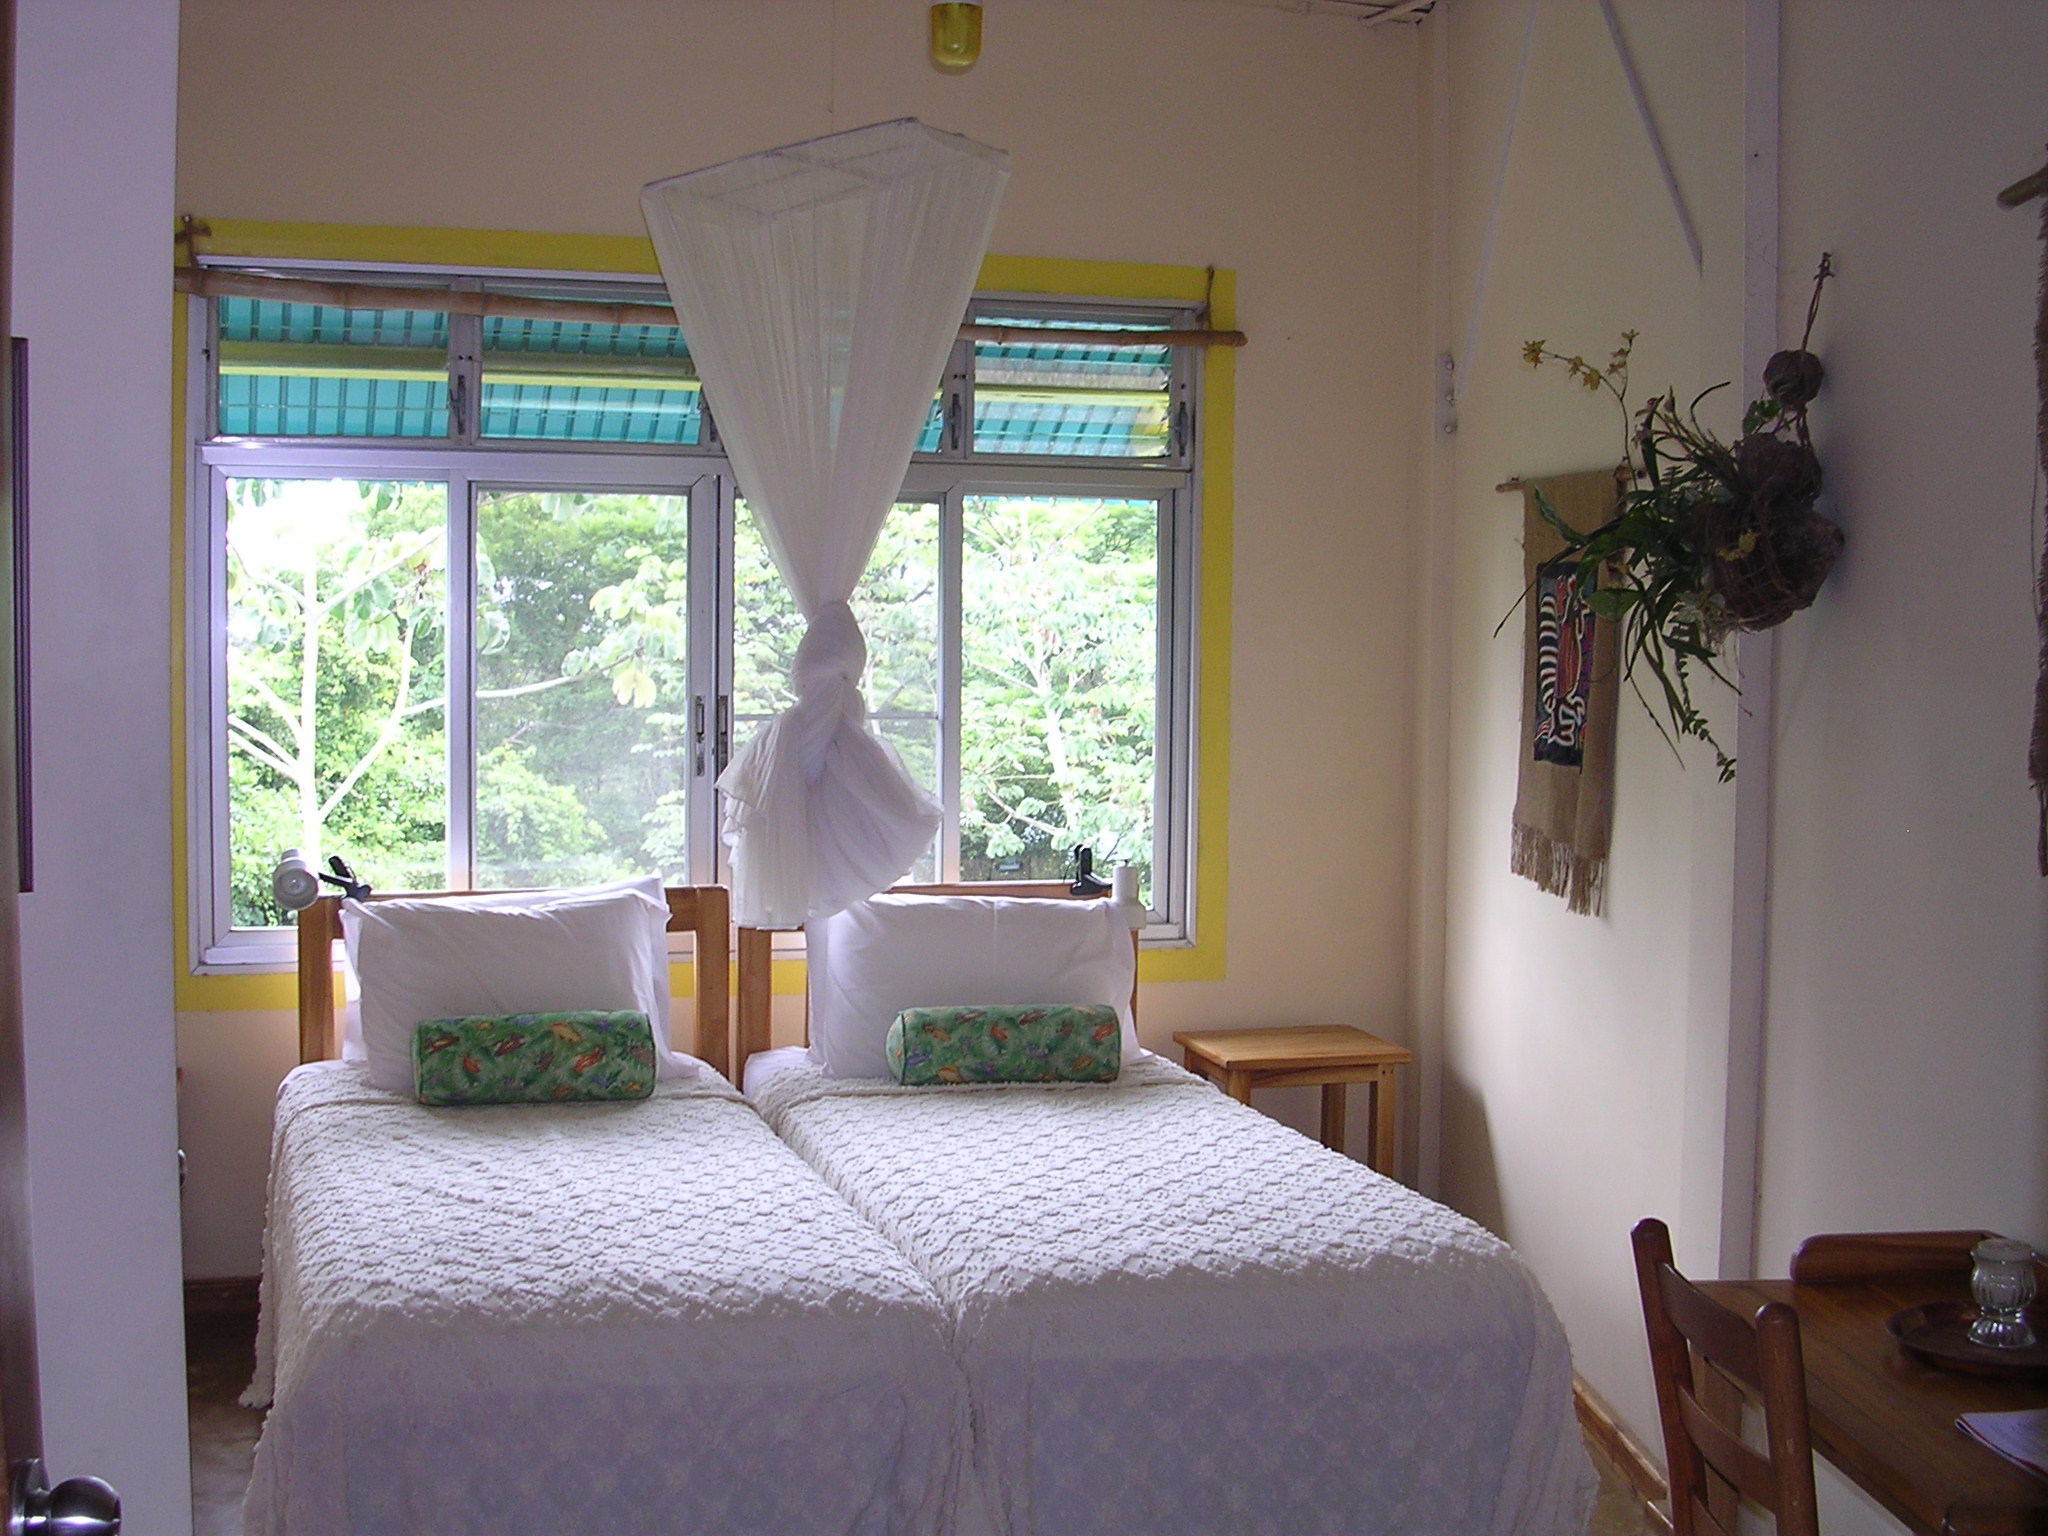 http://hotelesoriginales.com/wp-content/uploads/2010/05/bedroom_of_canopy_tower_in_gamboa_panama_01.jpg